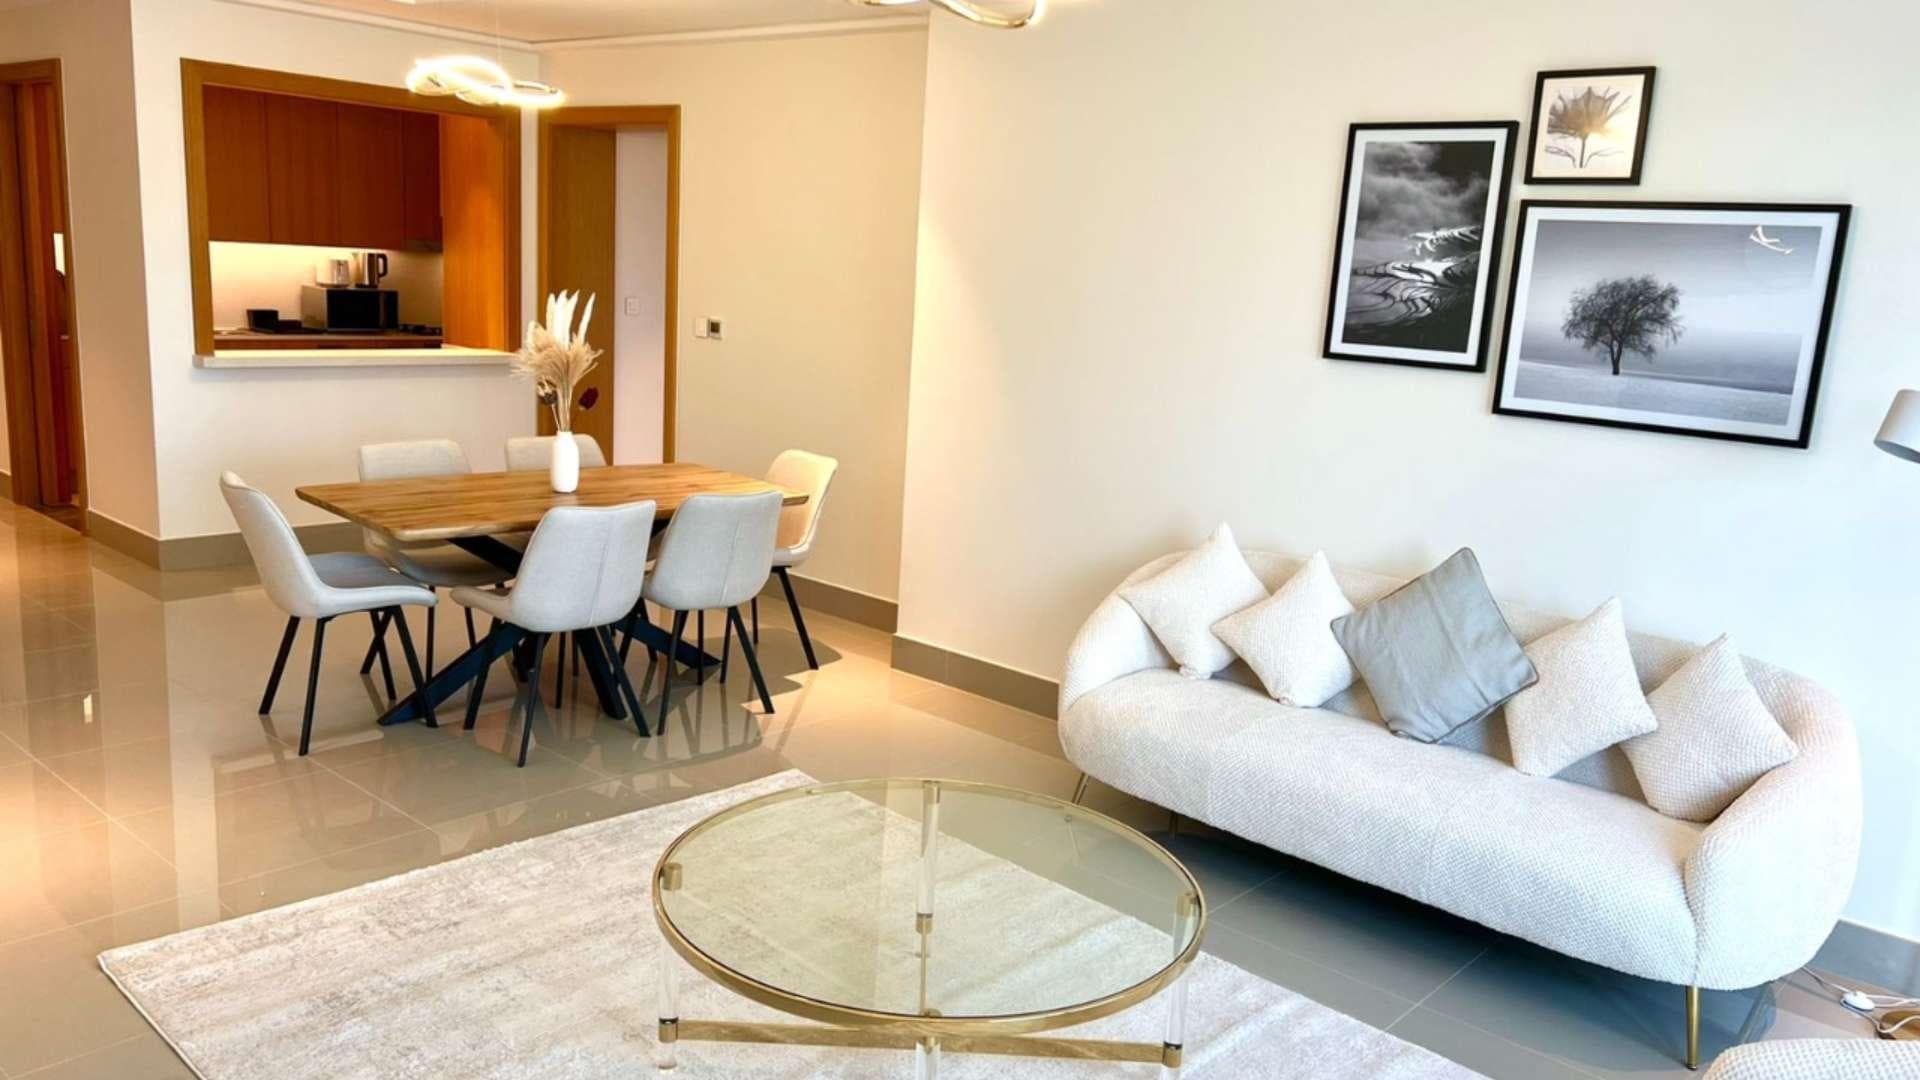 3 Bedroom Apartment For Rent Opera District Lp21078 11429f1c7431a700.jpg